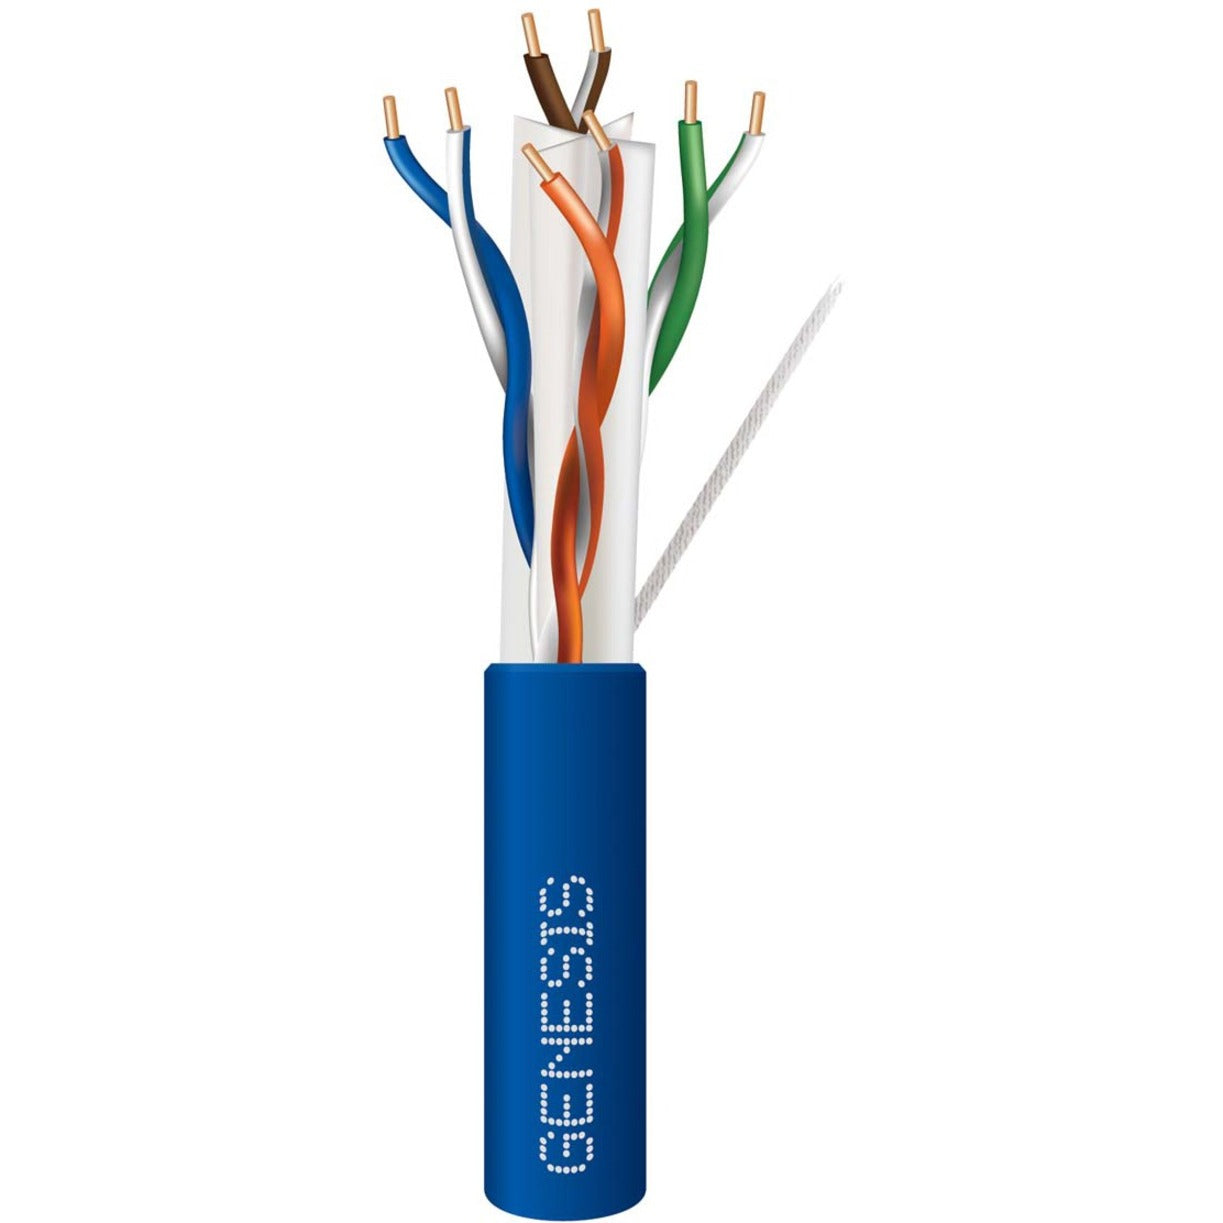 Genesis 50921106 Cat.6 UTP Network Cable, 1000 ft, Blue, Stranded, Sunlight Resistant